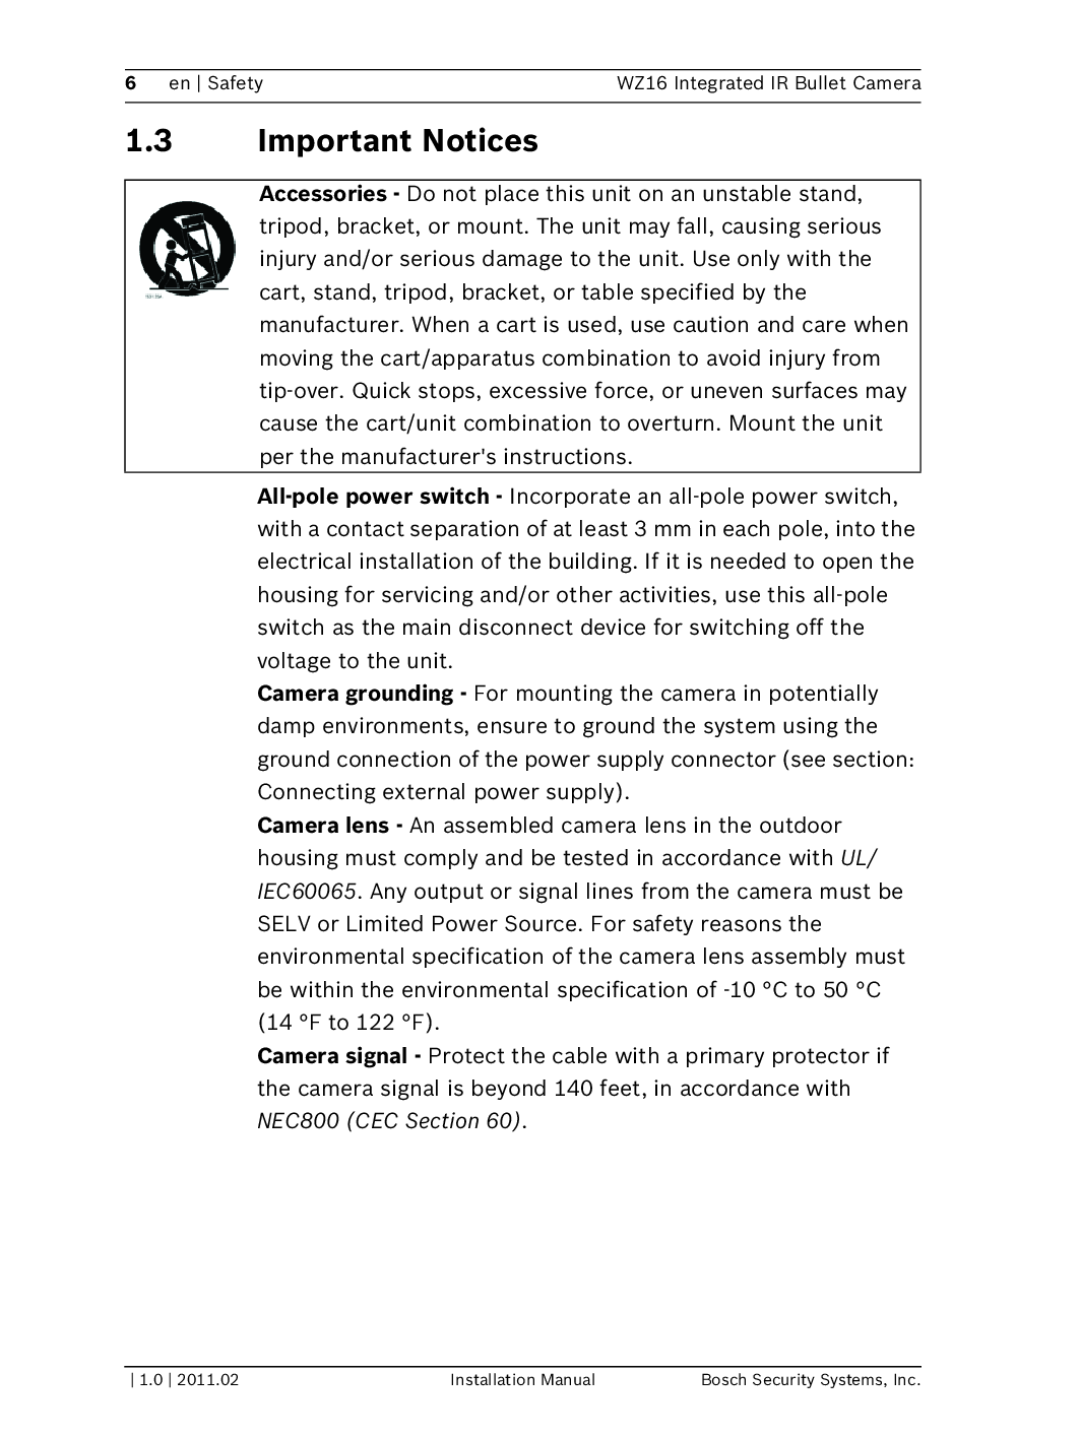 Bosch Appliances installation manual 1.3Important Notices, en Safety, WZ16 Integrated IR Bullet Camera 